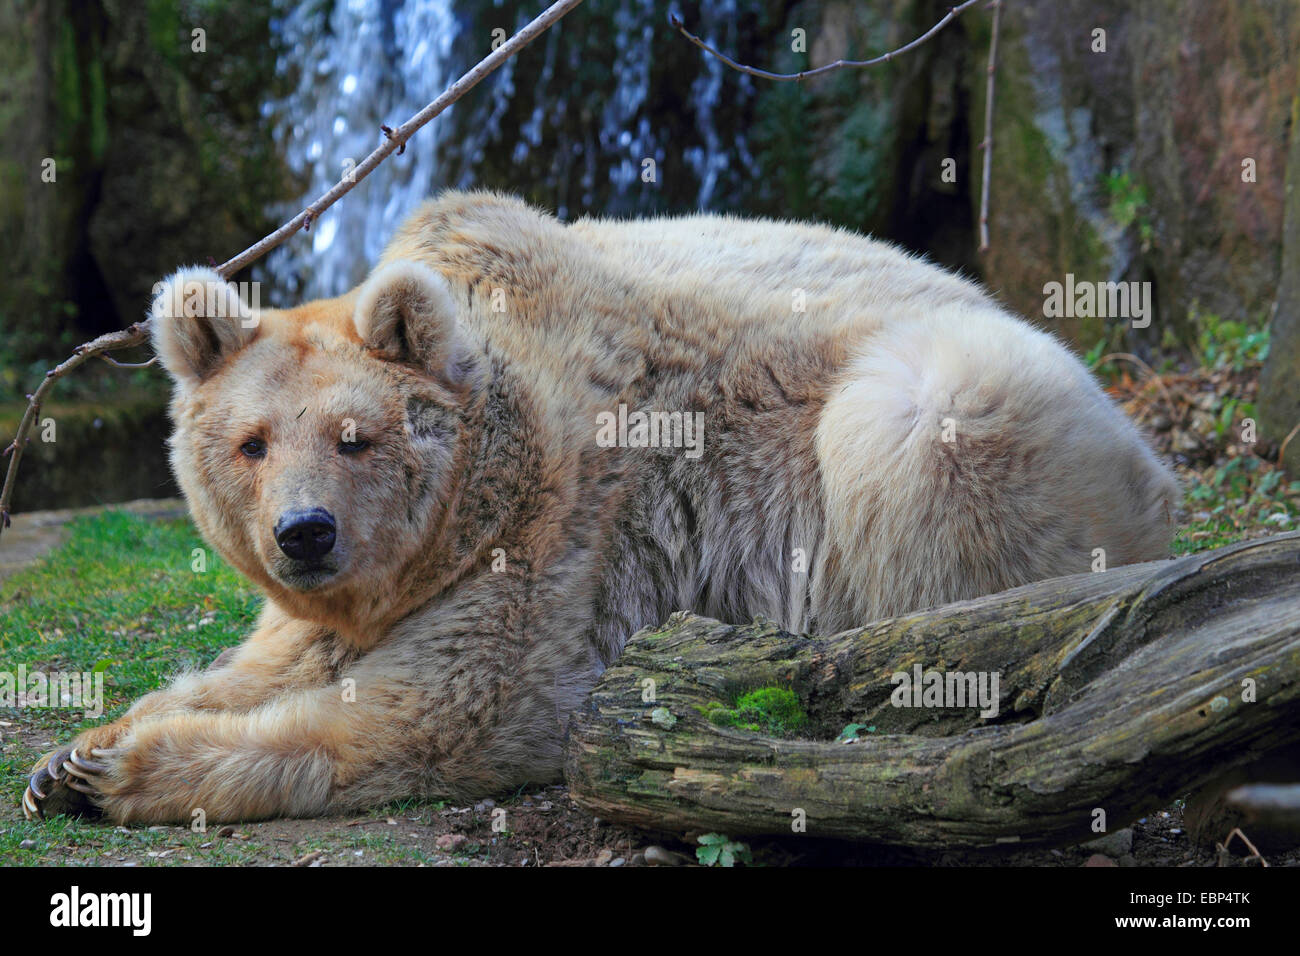 Siro l'orso bruno (Ursus arctos syriacus), Adulto orso bruno con luce pelliccia marrone Foto Stock